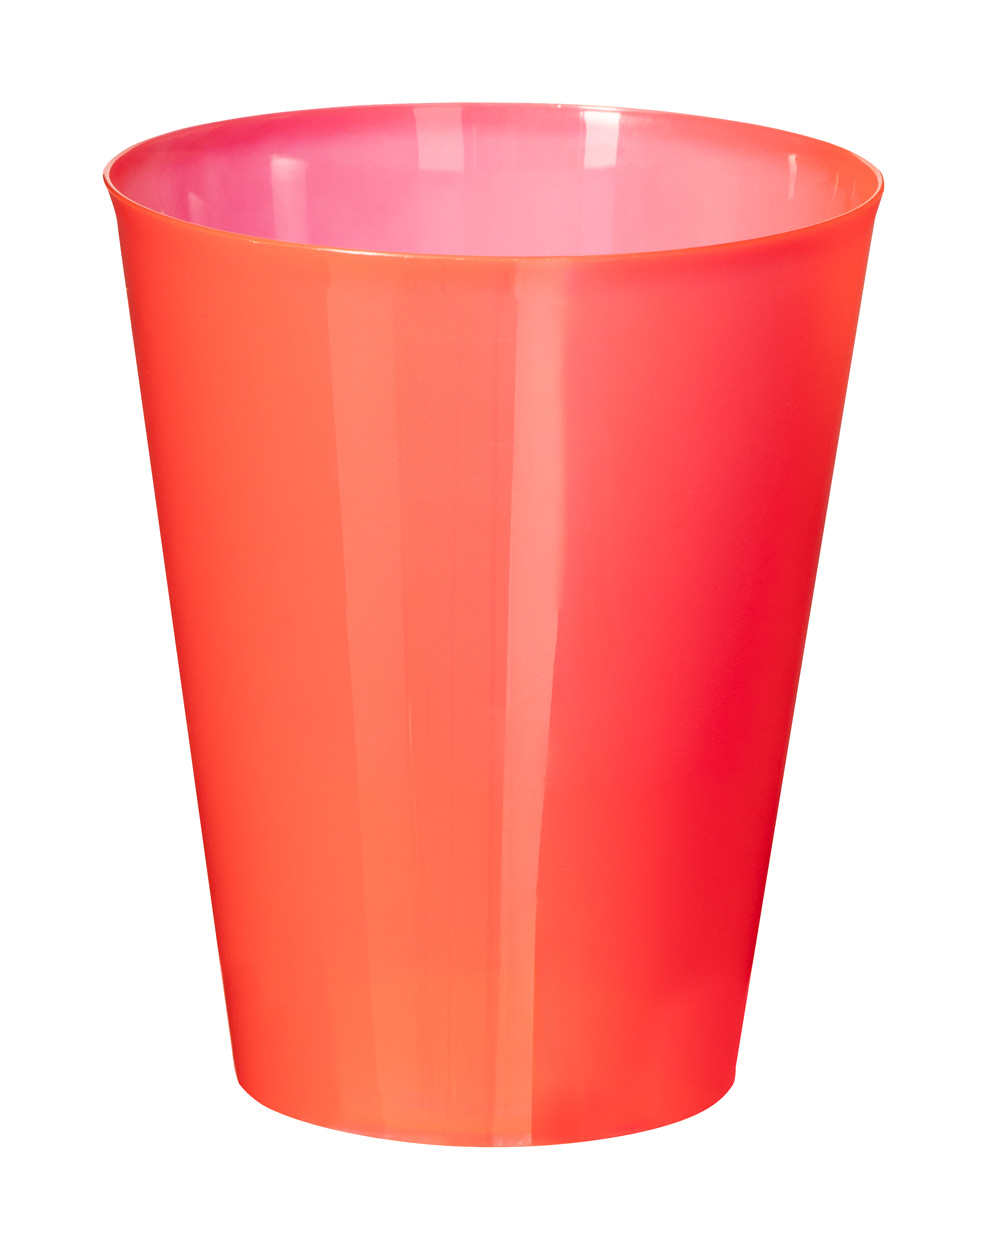 Colorbert reusable event cup